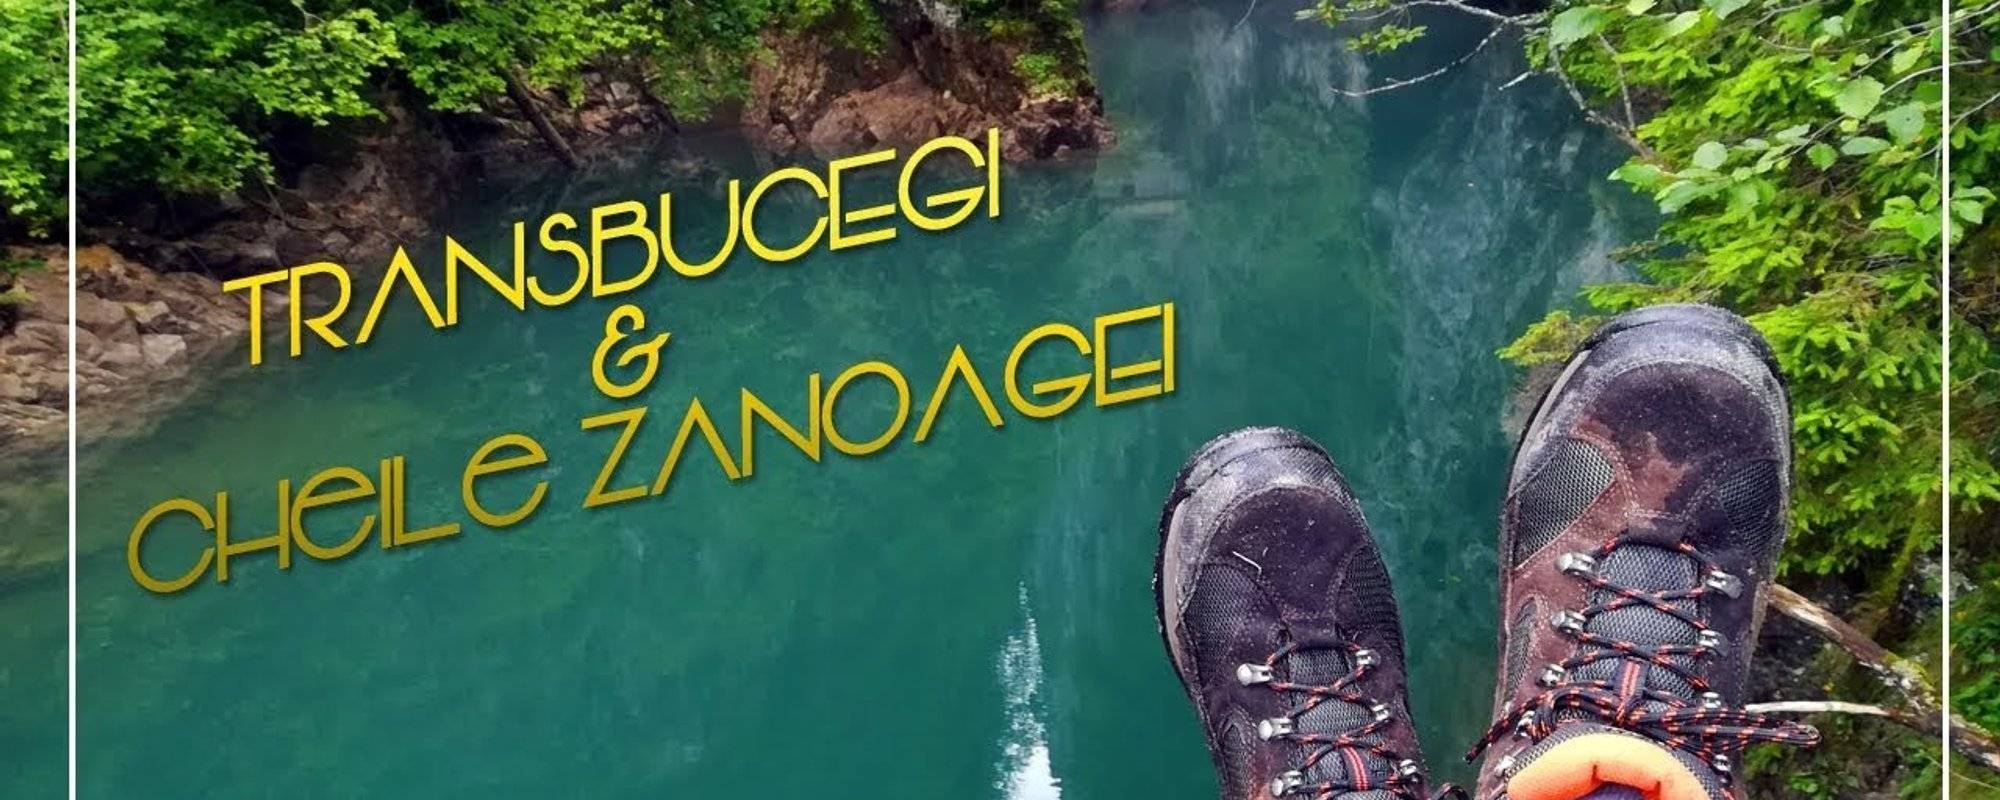 See The World #12 - TransBucegi, Zănoaga Gorges, Scropoasa Lake, 7 Springs Waterfall (Roadtrip Part 9)